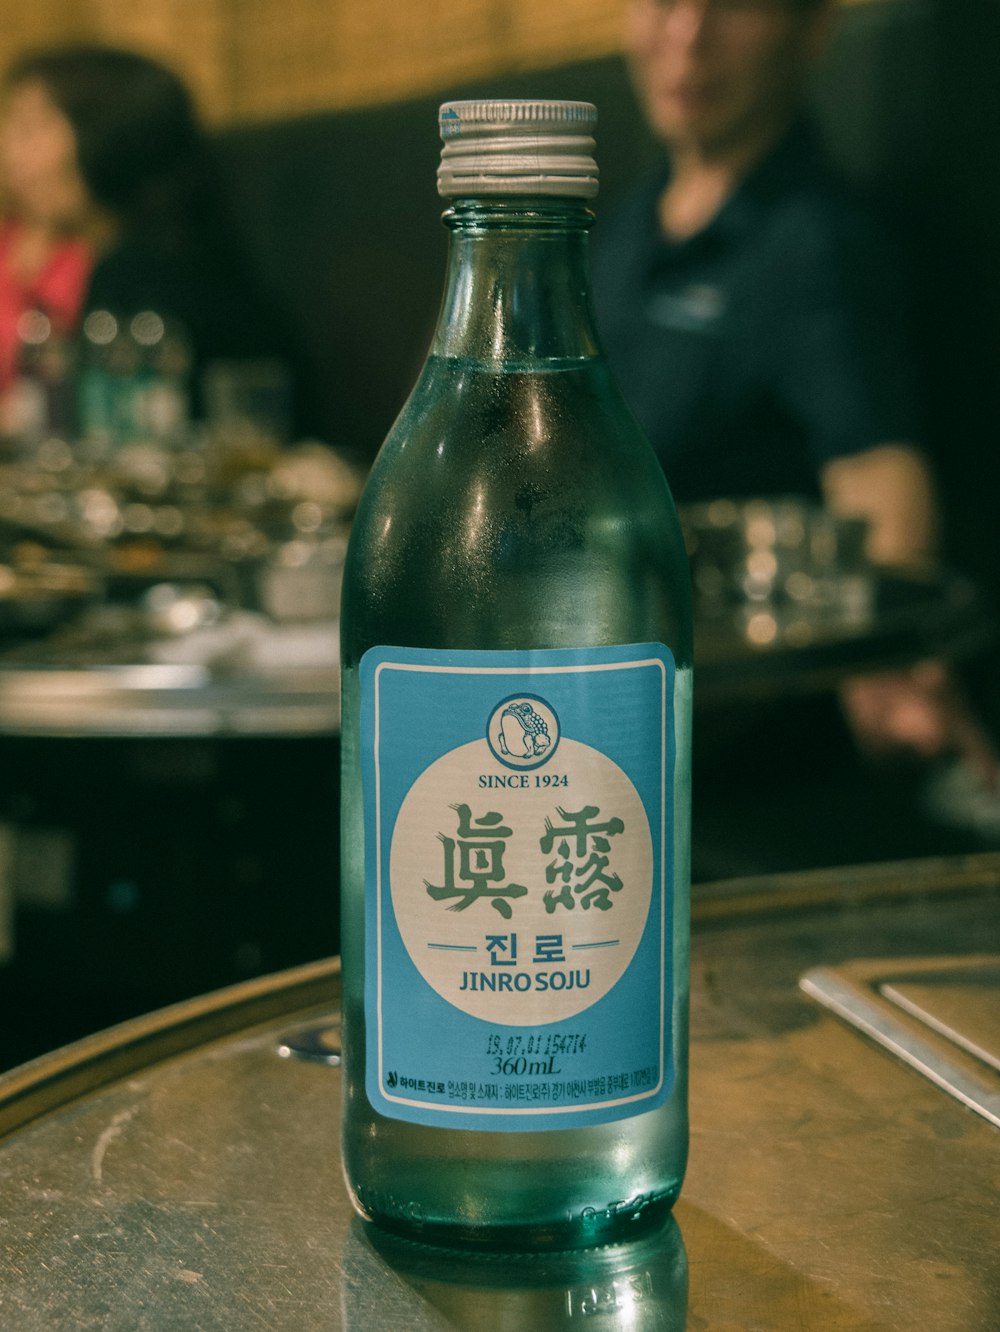 Jinro Soju bottle on table